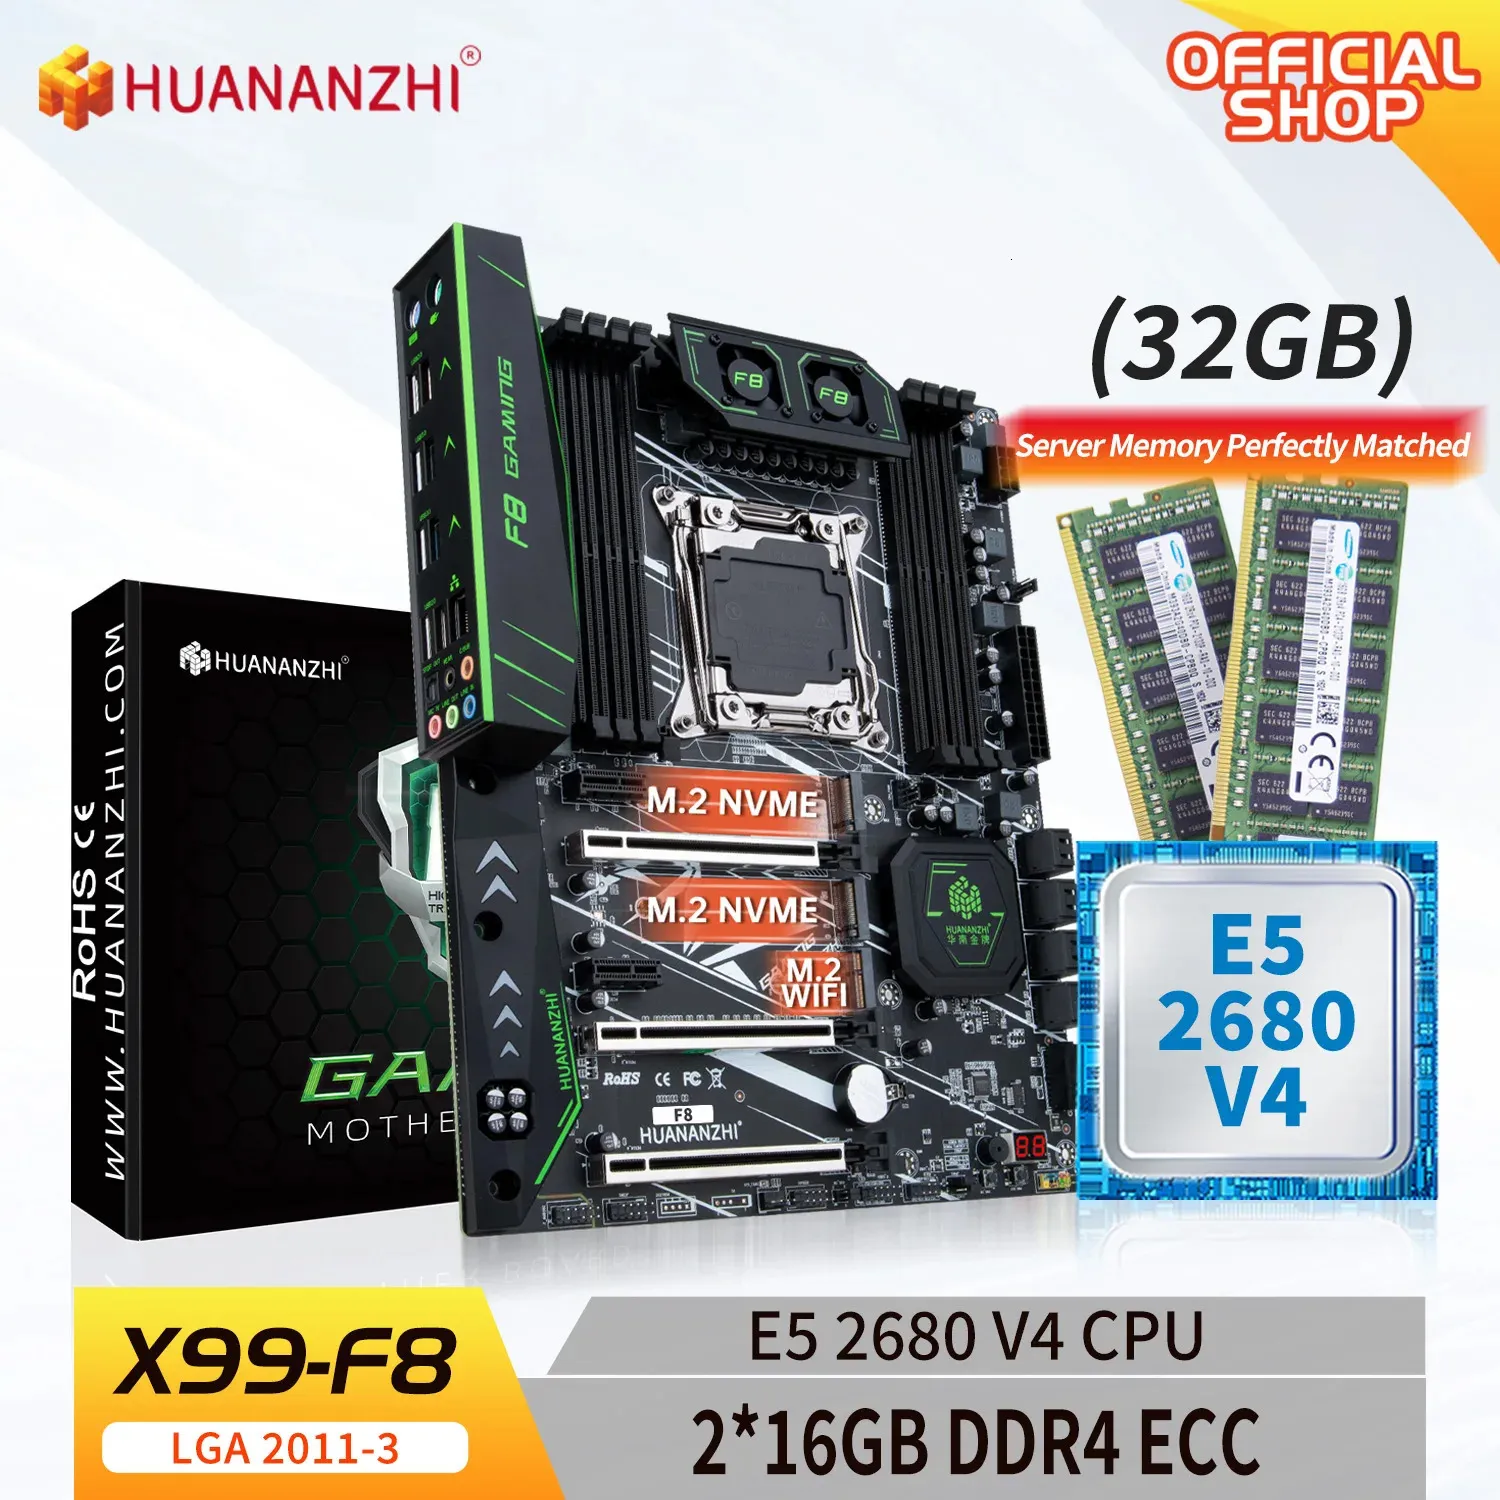 Huananzhi X99 F8 LGA 2011-3 Xeon X99 Intel E5 2680 V4付きマザーボード2*16G DDR4 ECCメモリコンボキットセットNVME SATA 240307